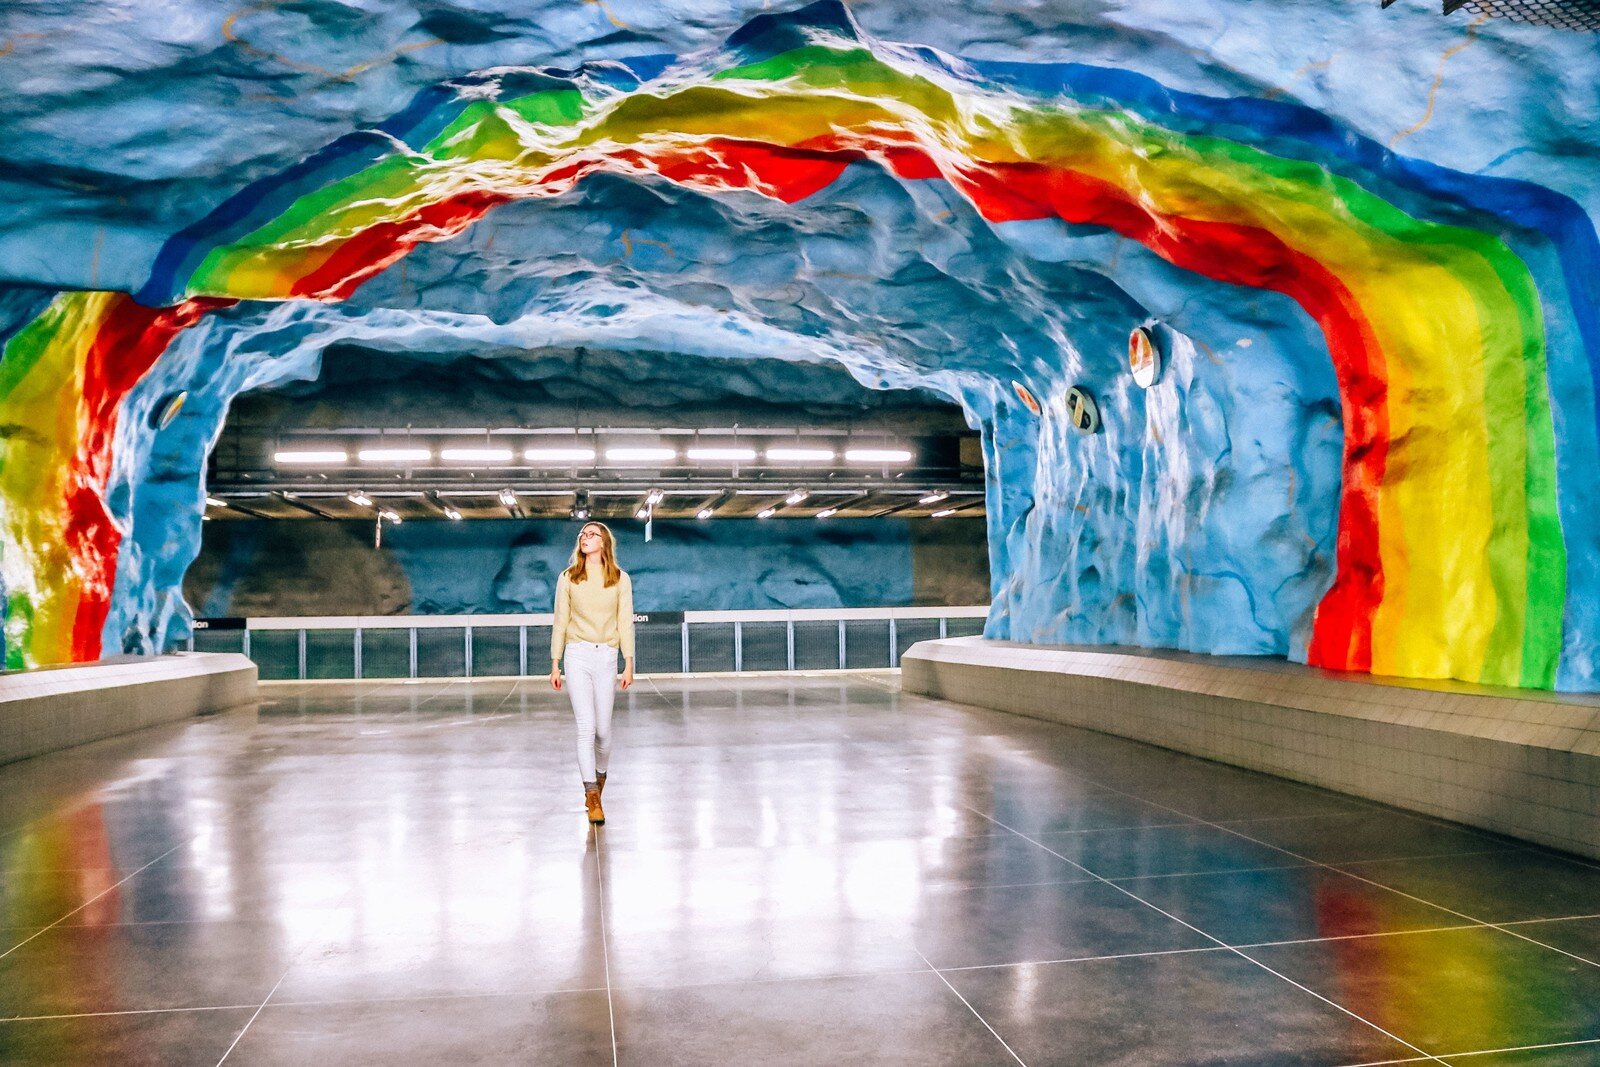 Colourful artwork in Stockholm train station